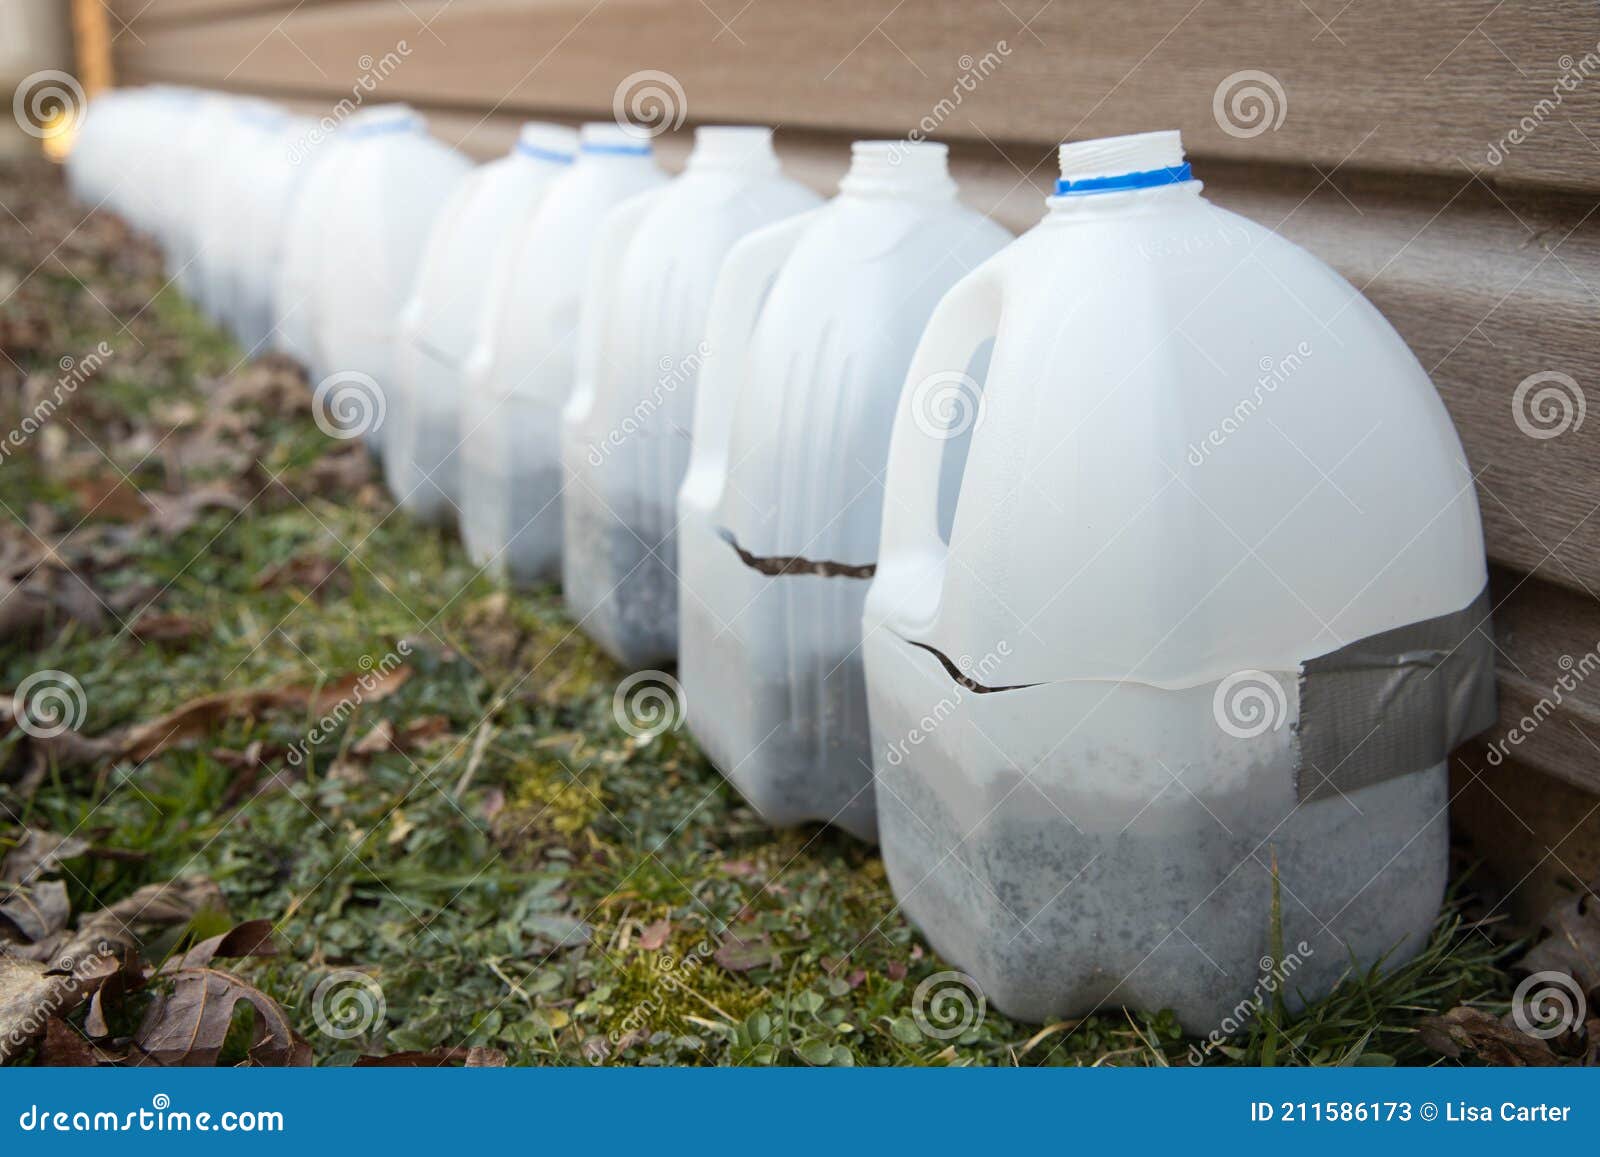 Milk Jugs Used for Seed Starting Stock Image - Image of gardener ...